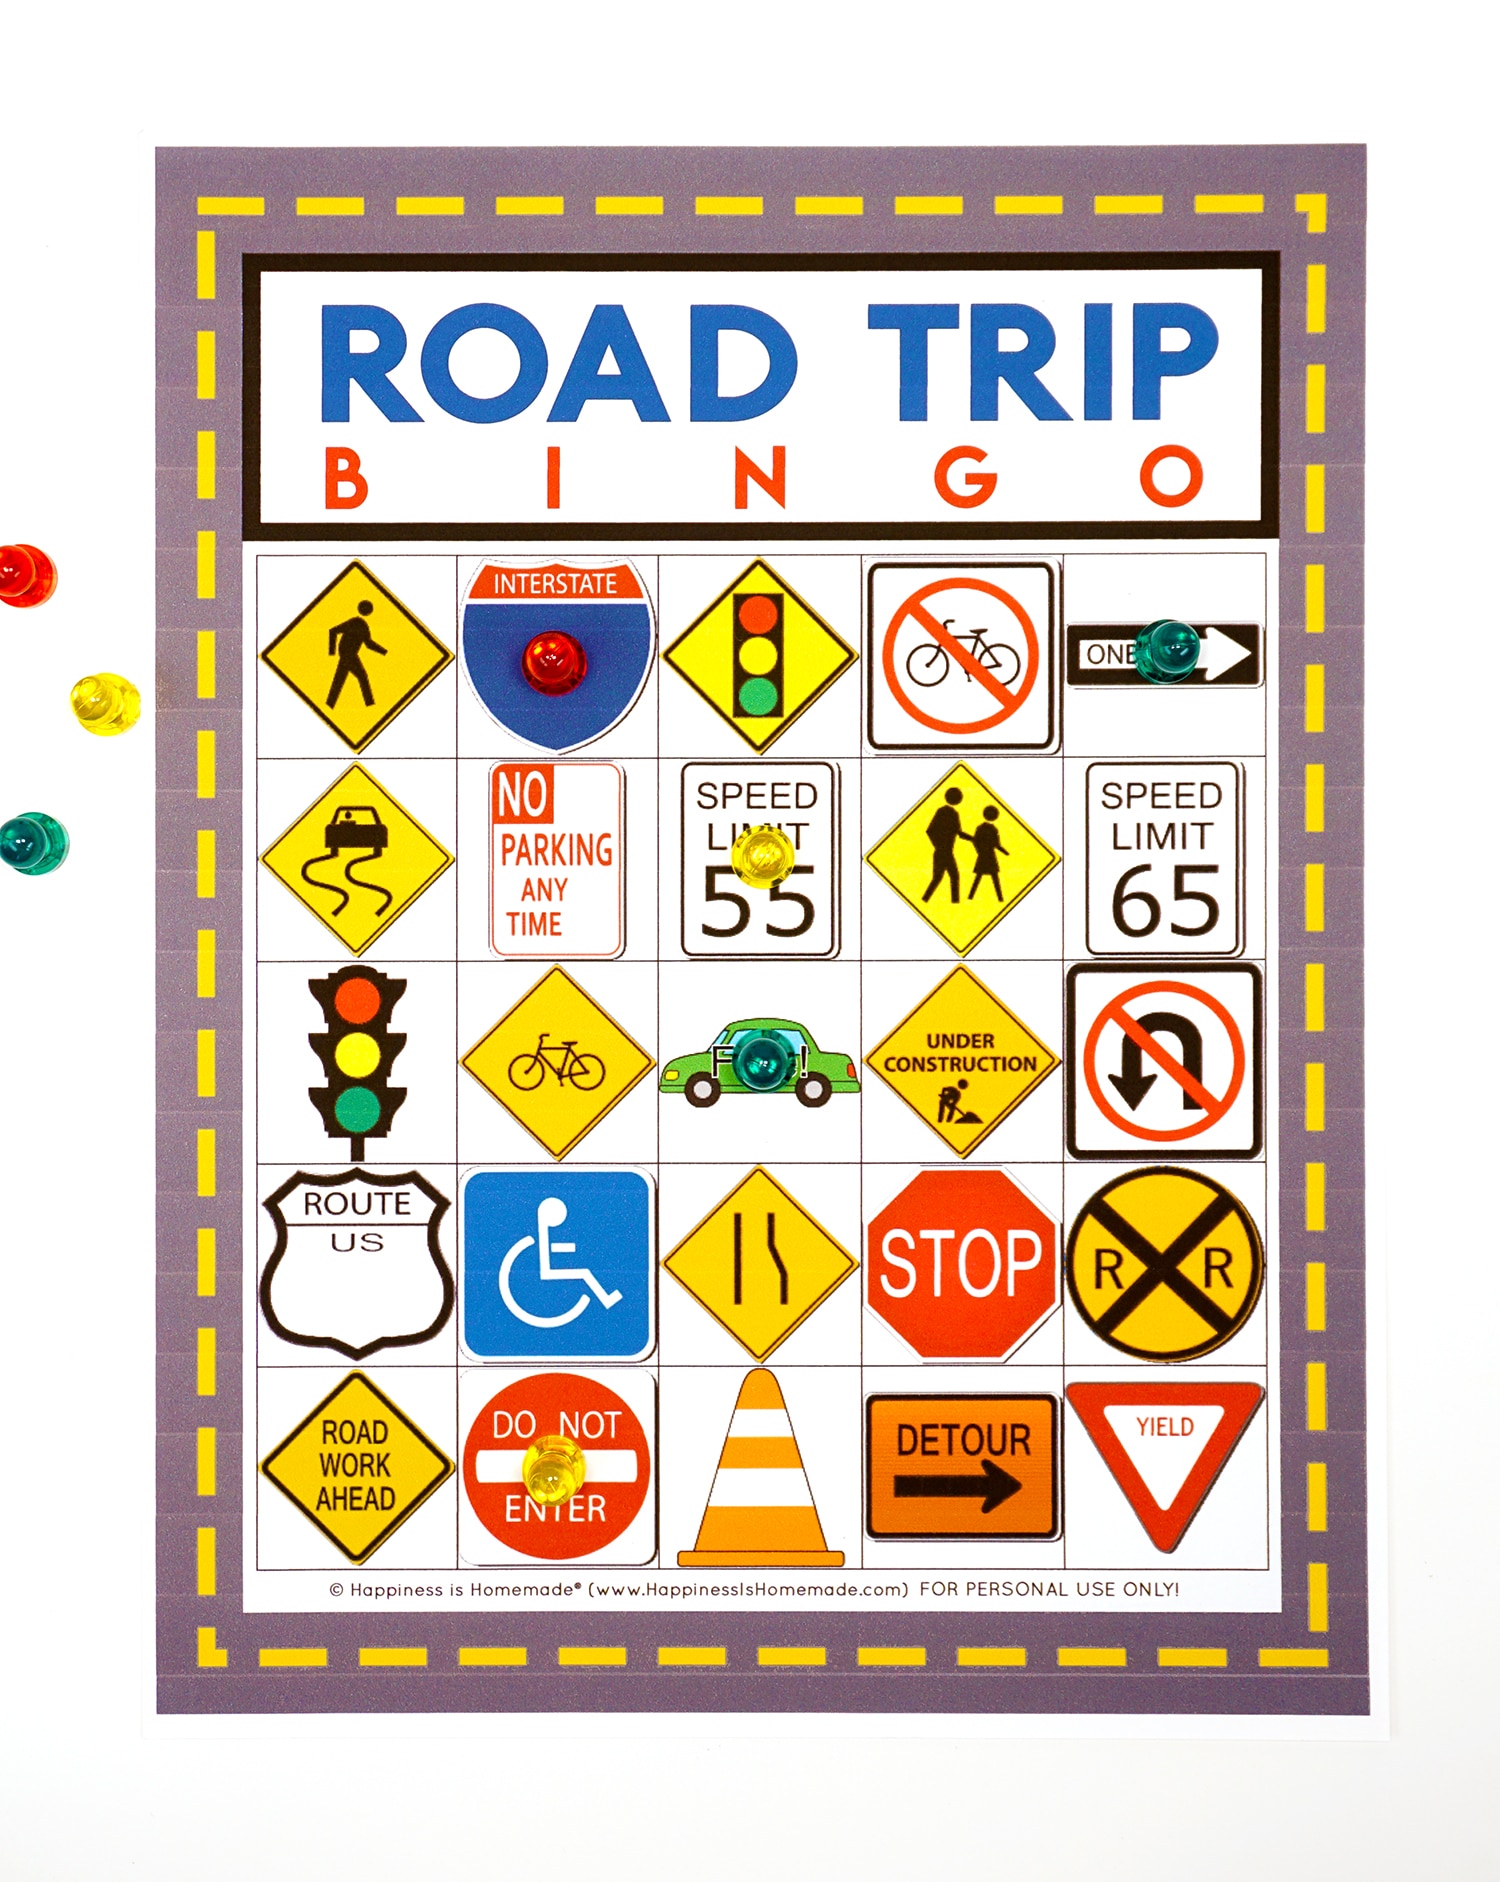 Bingo Fun - Free Bingo Games,Bingo Games Free Download,Bingo Games